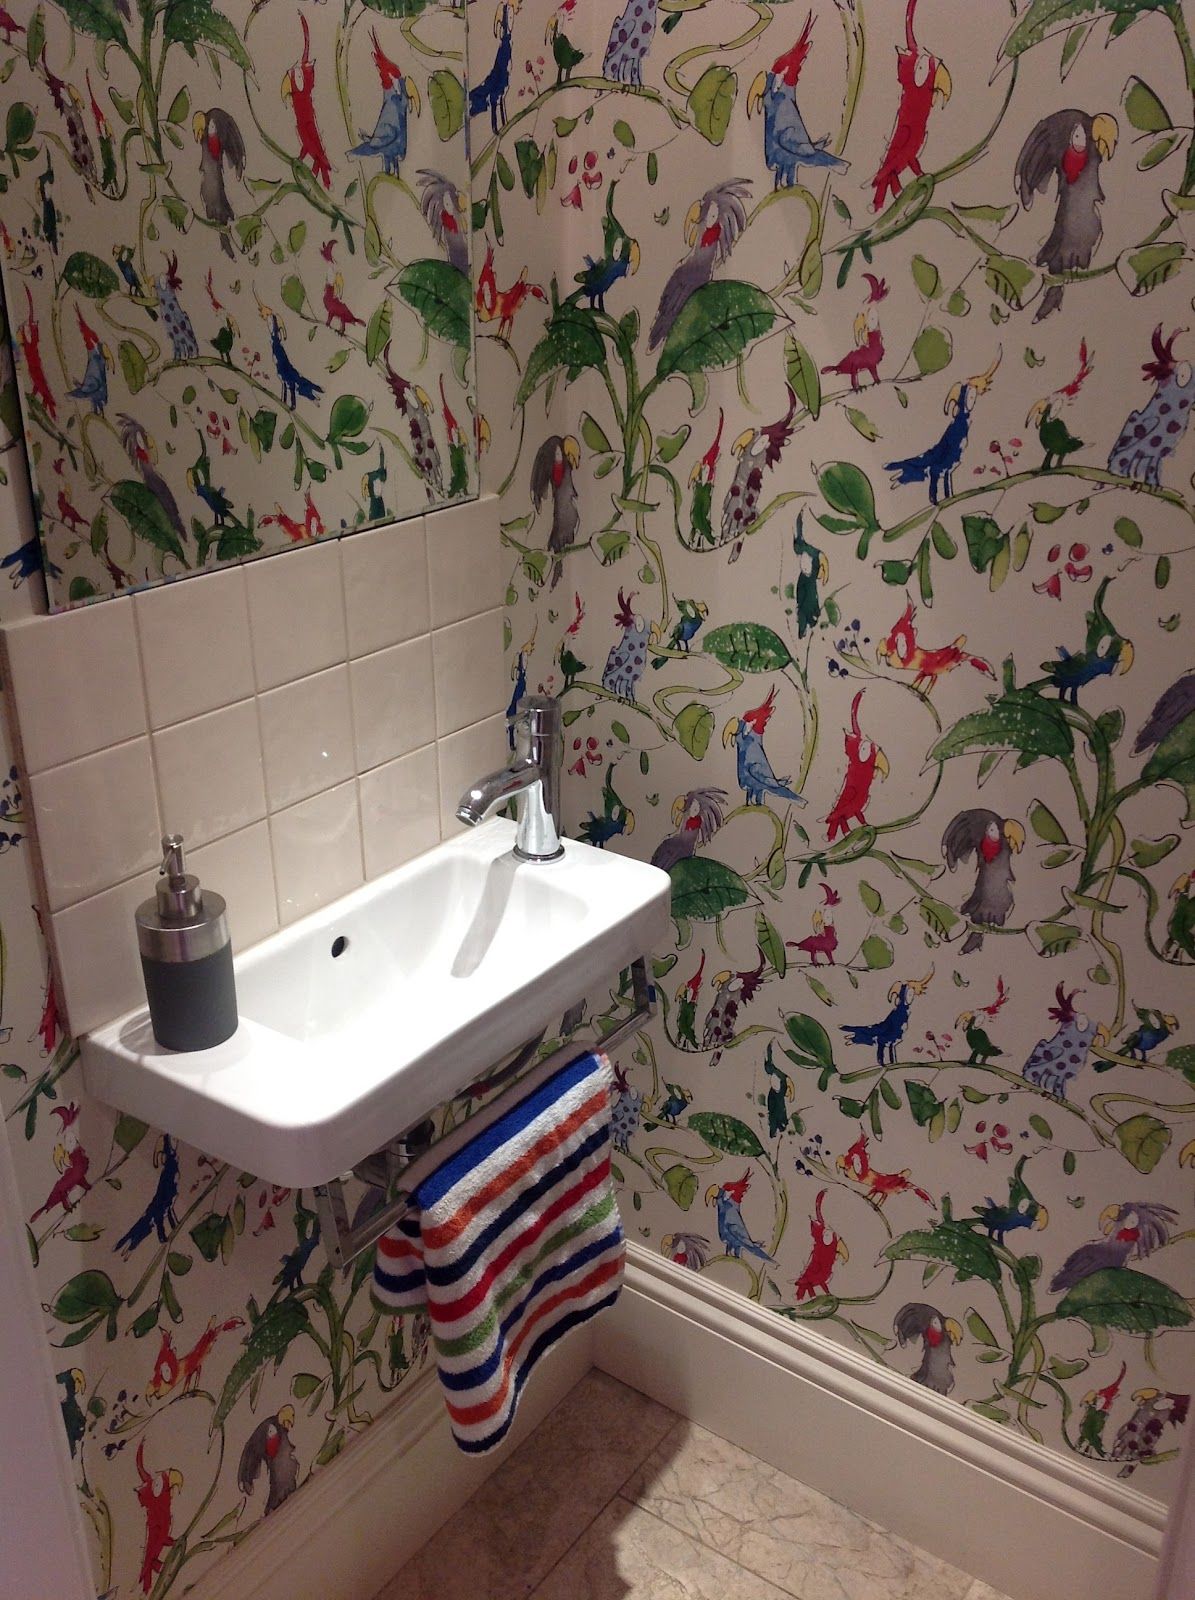 downstairs toilet wallpaper,bathroom,room,property,tile,interior design